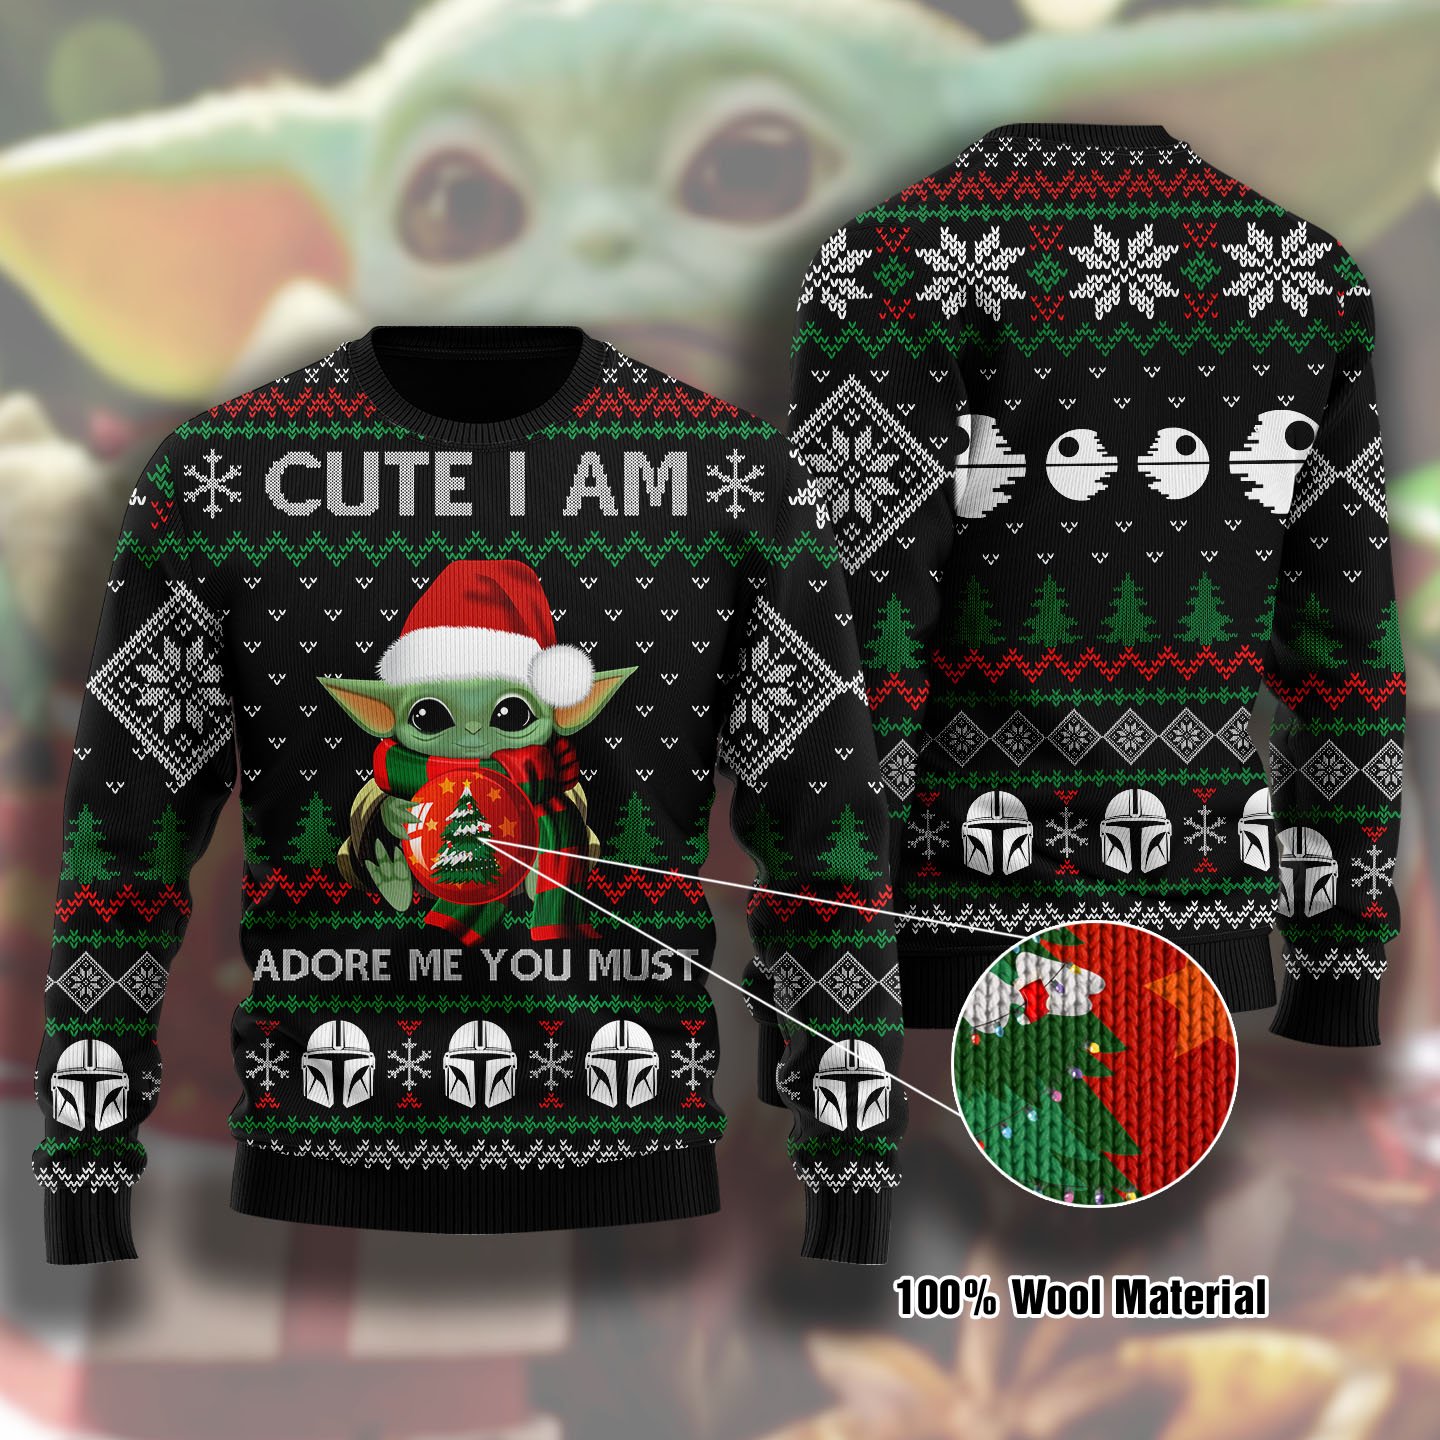 Baby yoda cute i am adore me you must christmas sweater